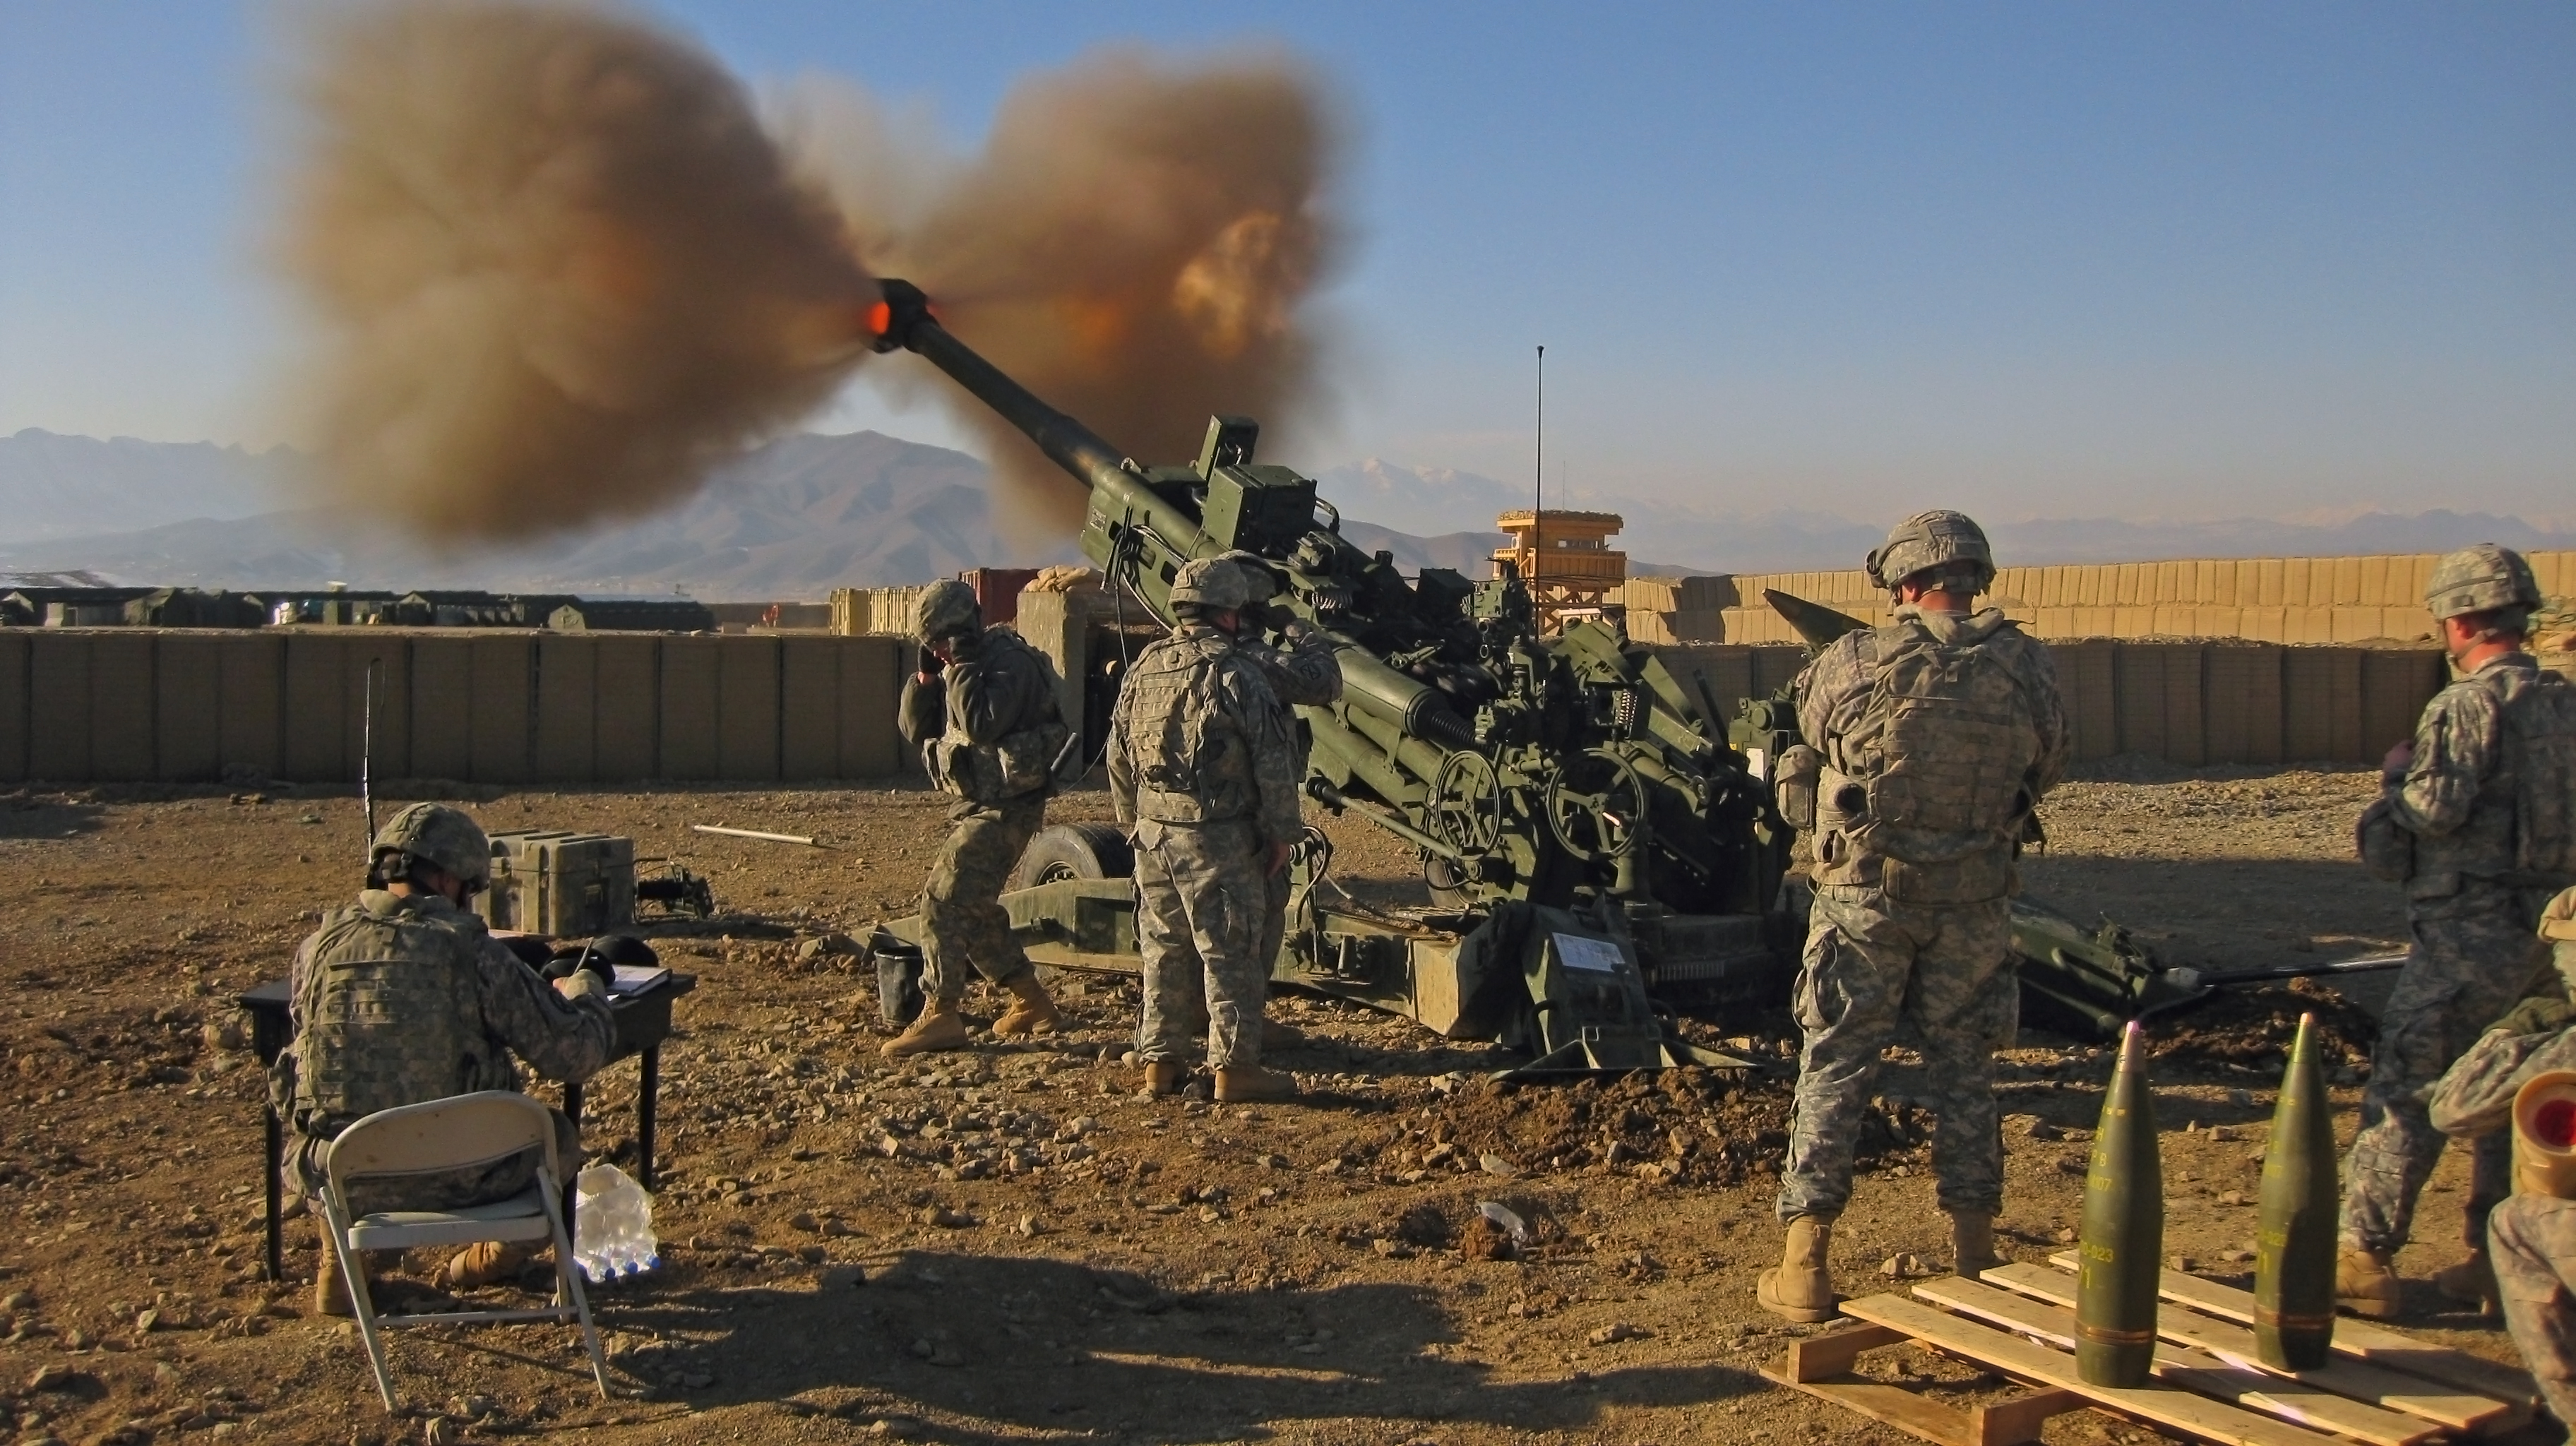 M777 howitzer - Wikipedia